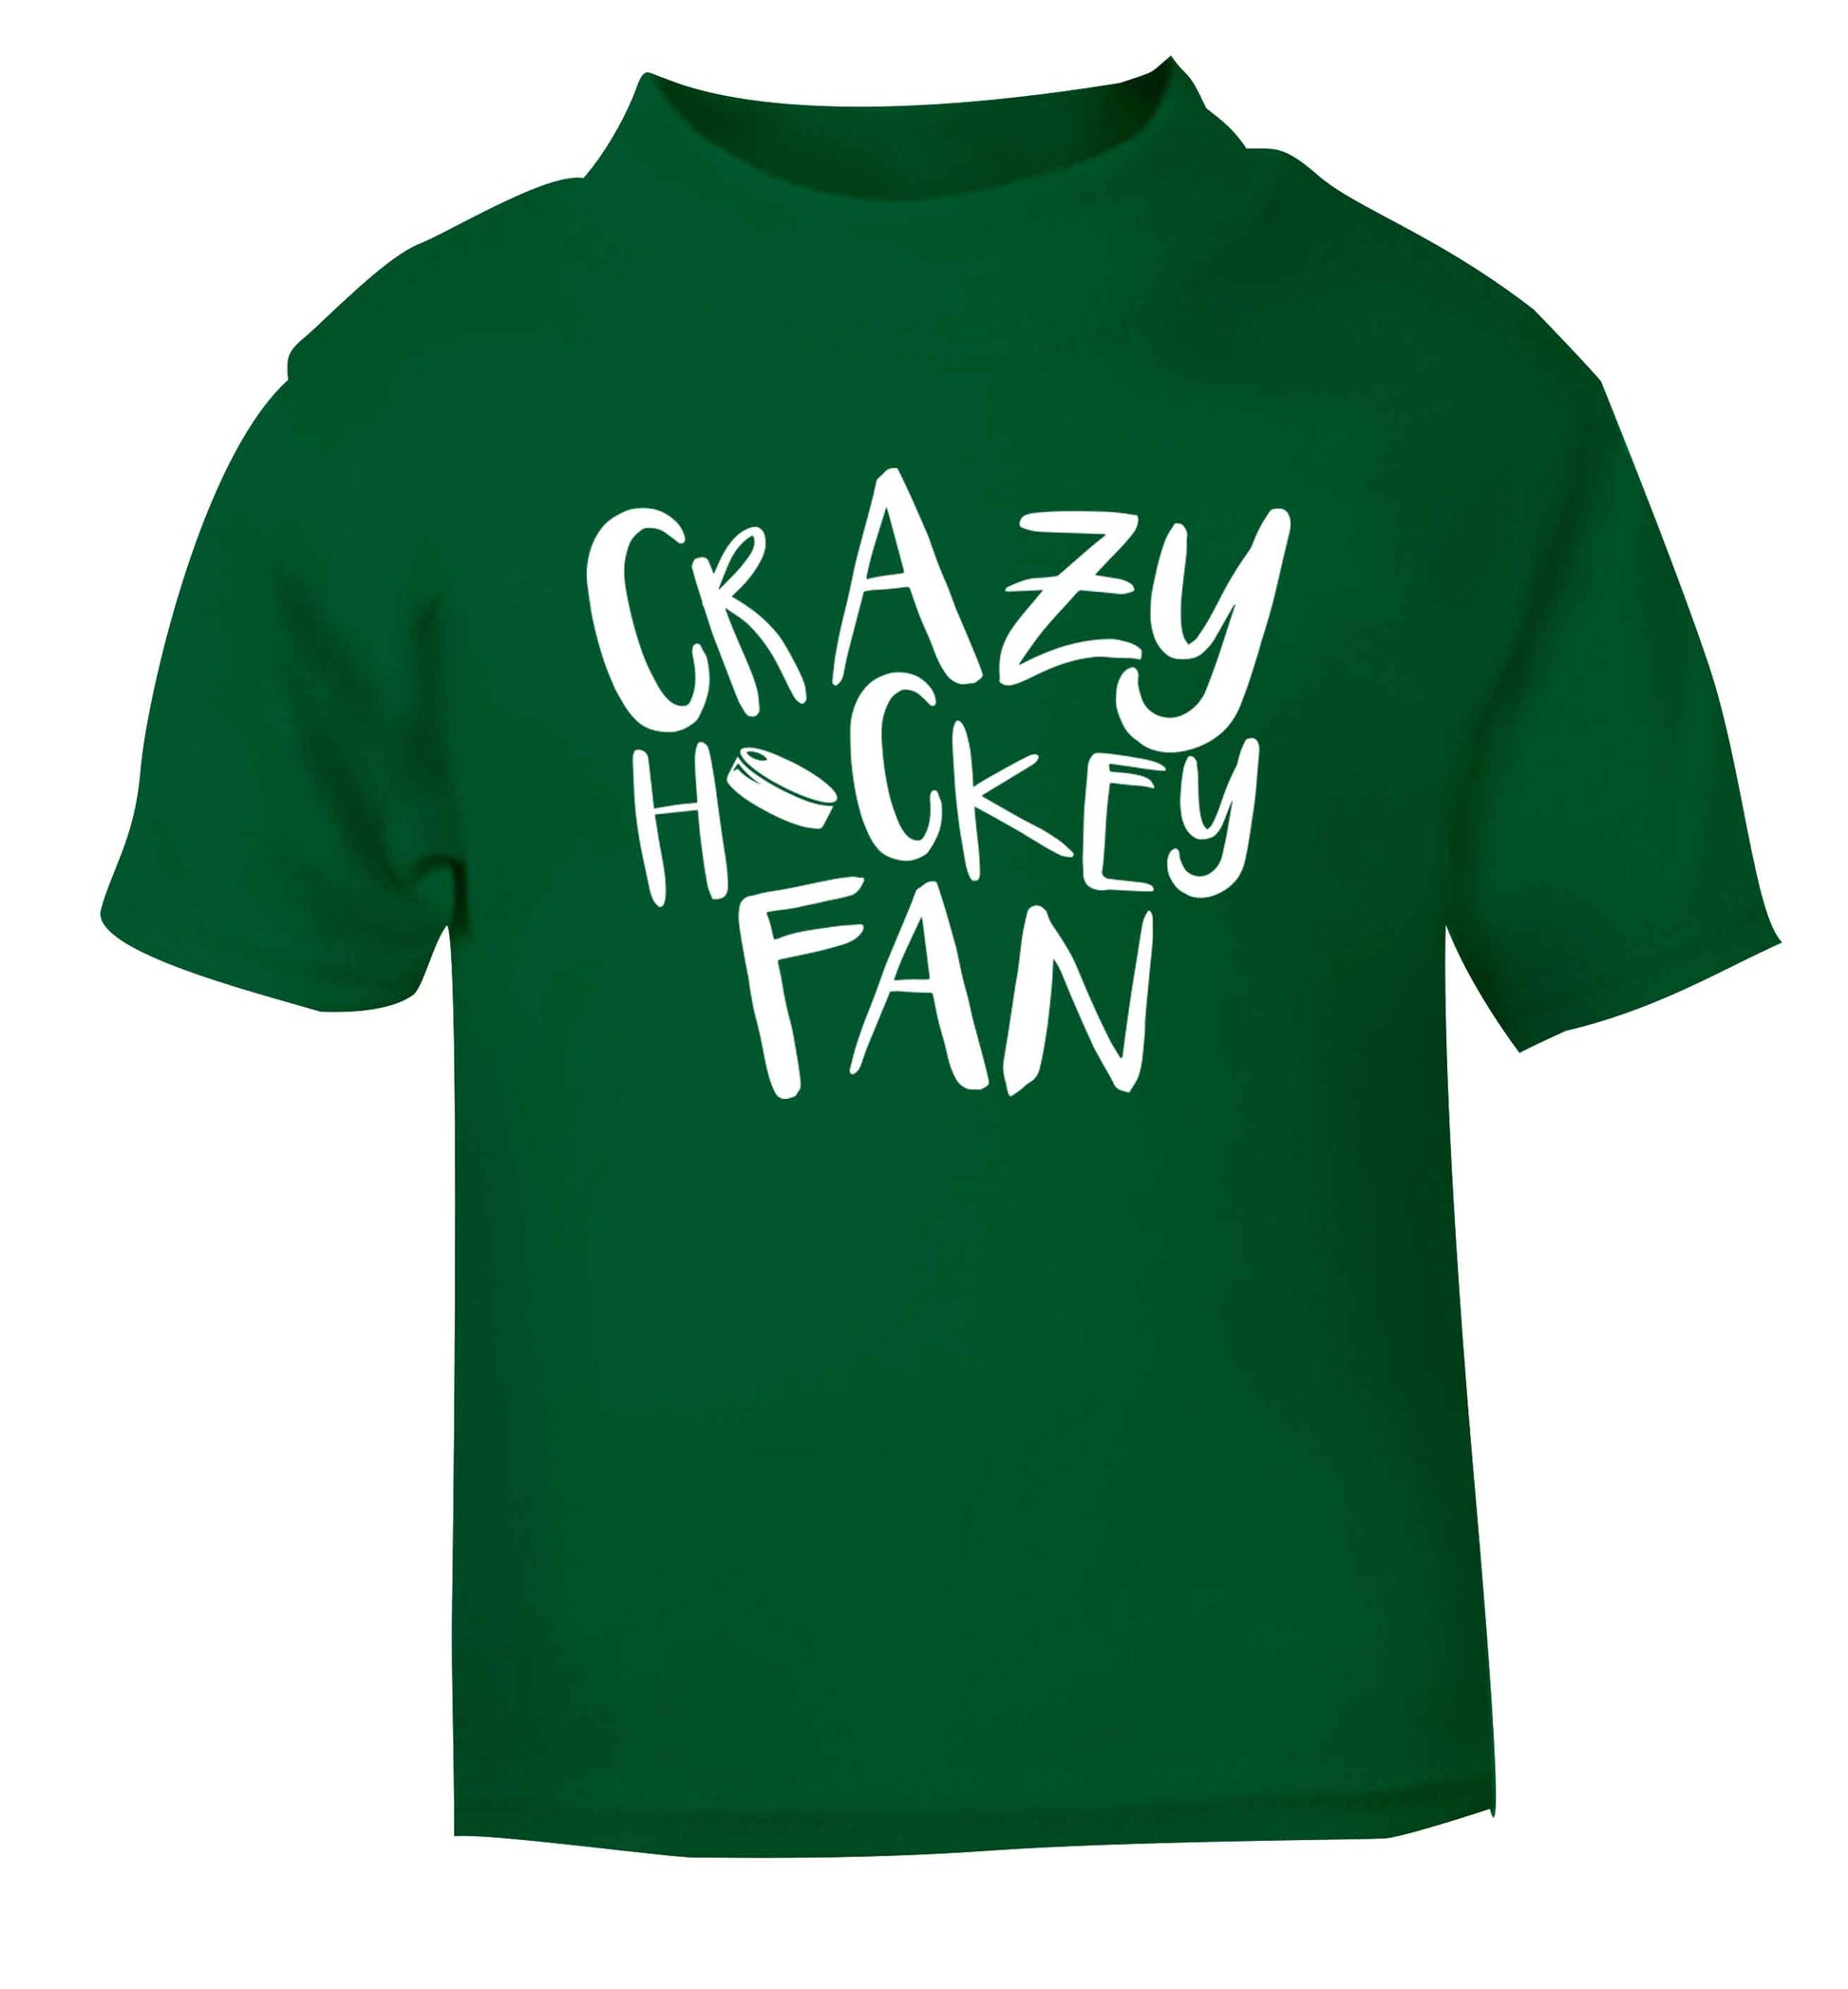 Crazy hockey fan green Baby Toddler Tshirt 2 Years